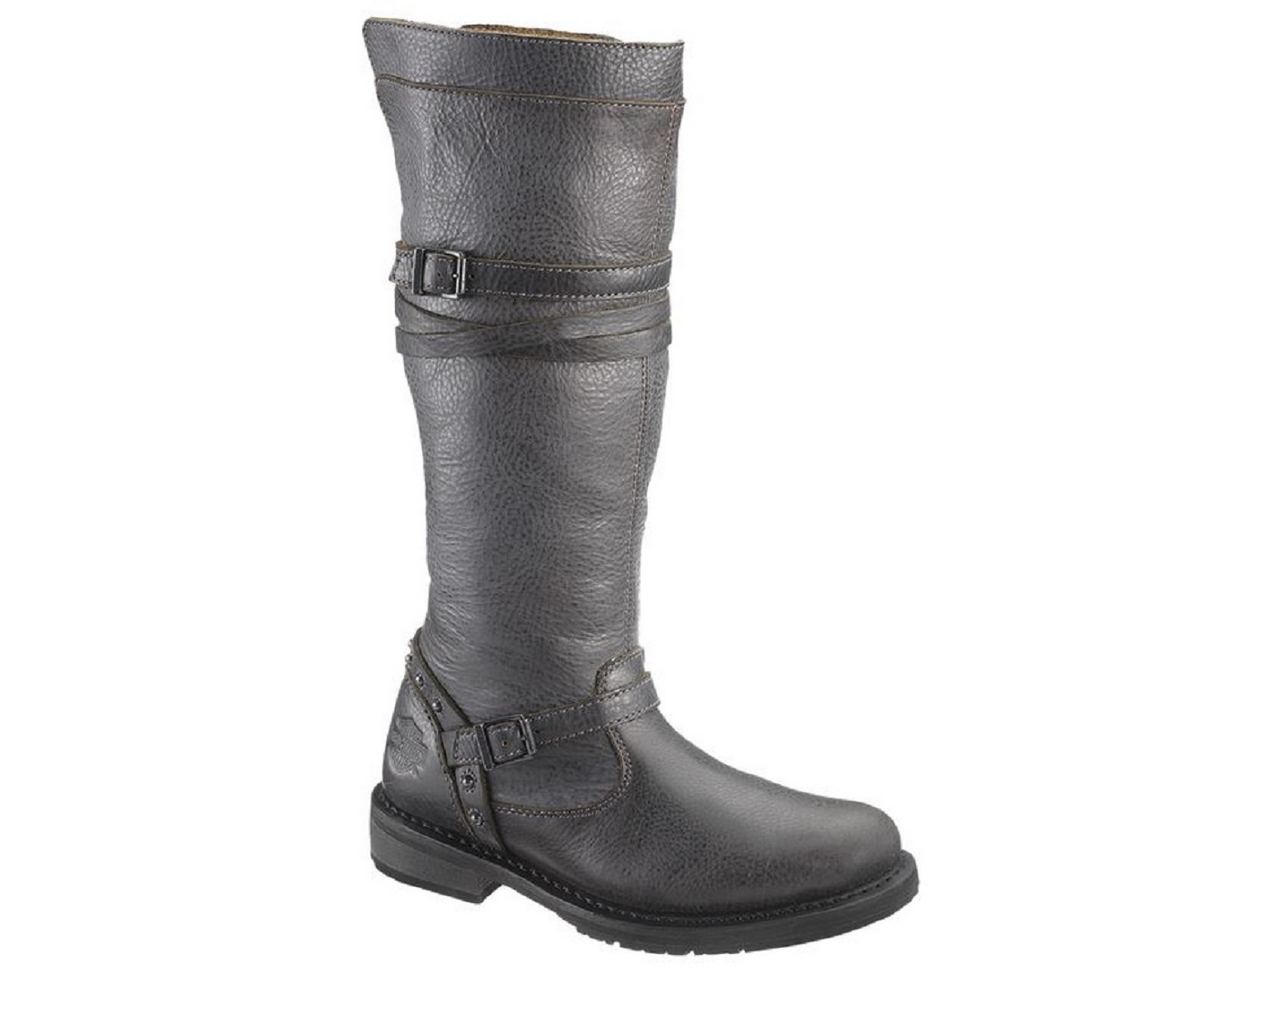 grey harley davidson boots